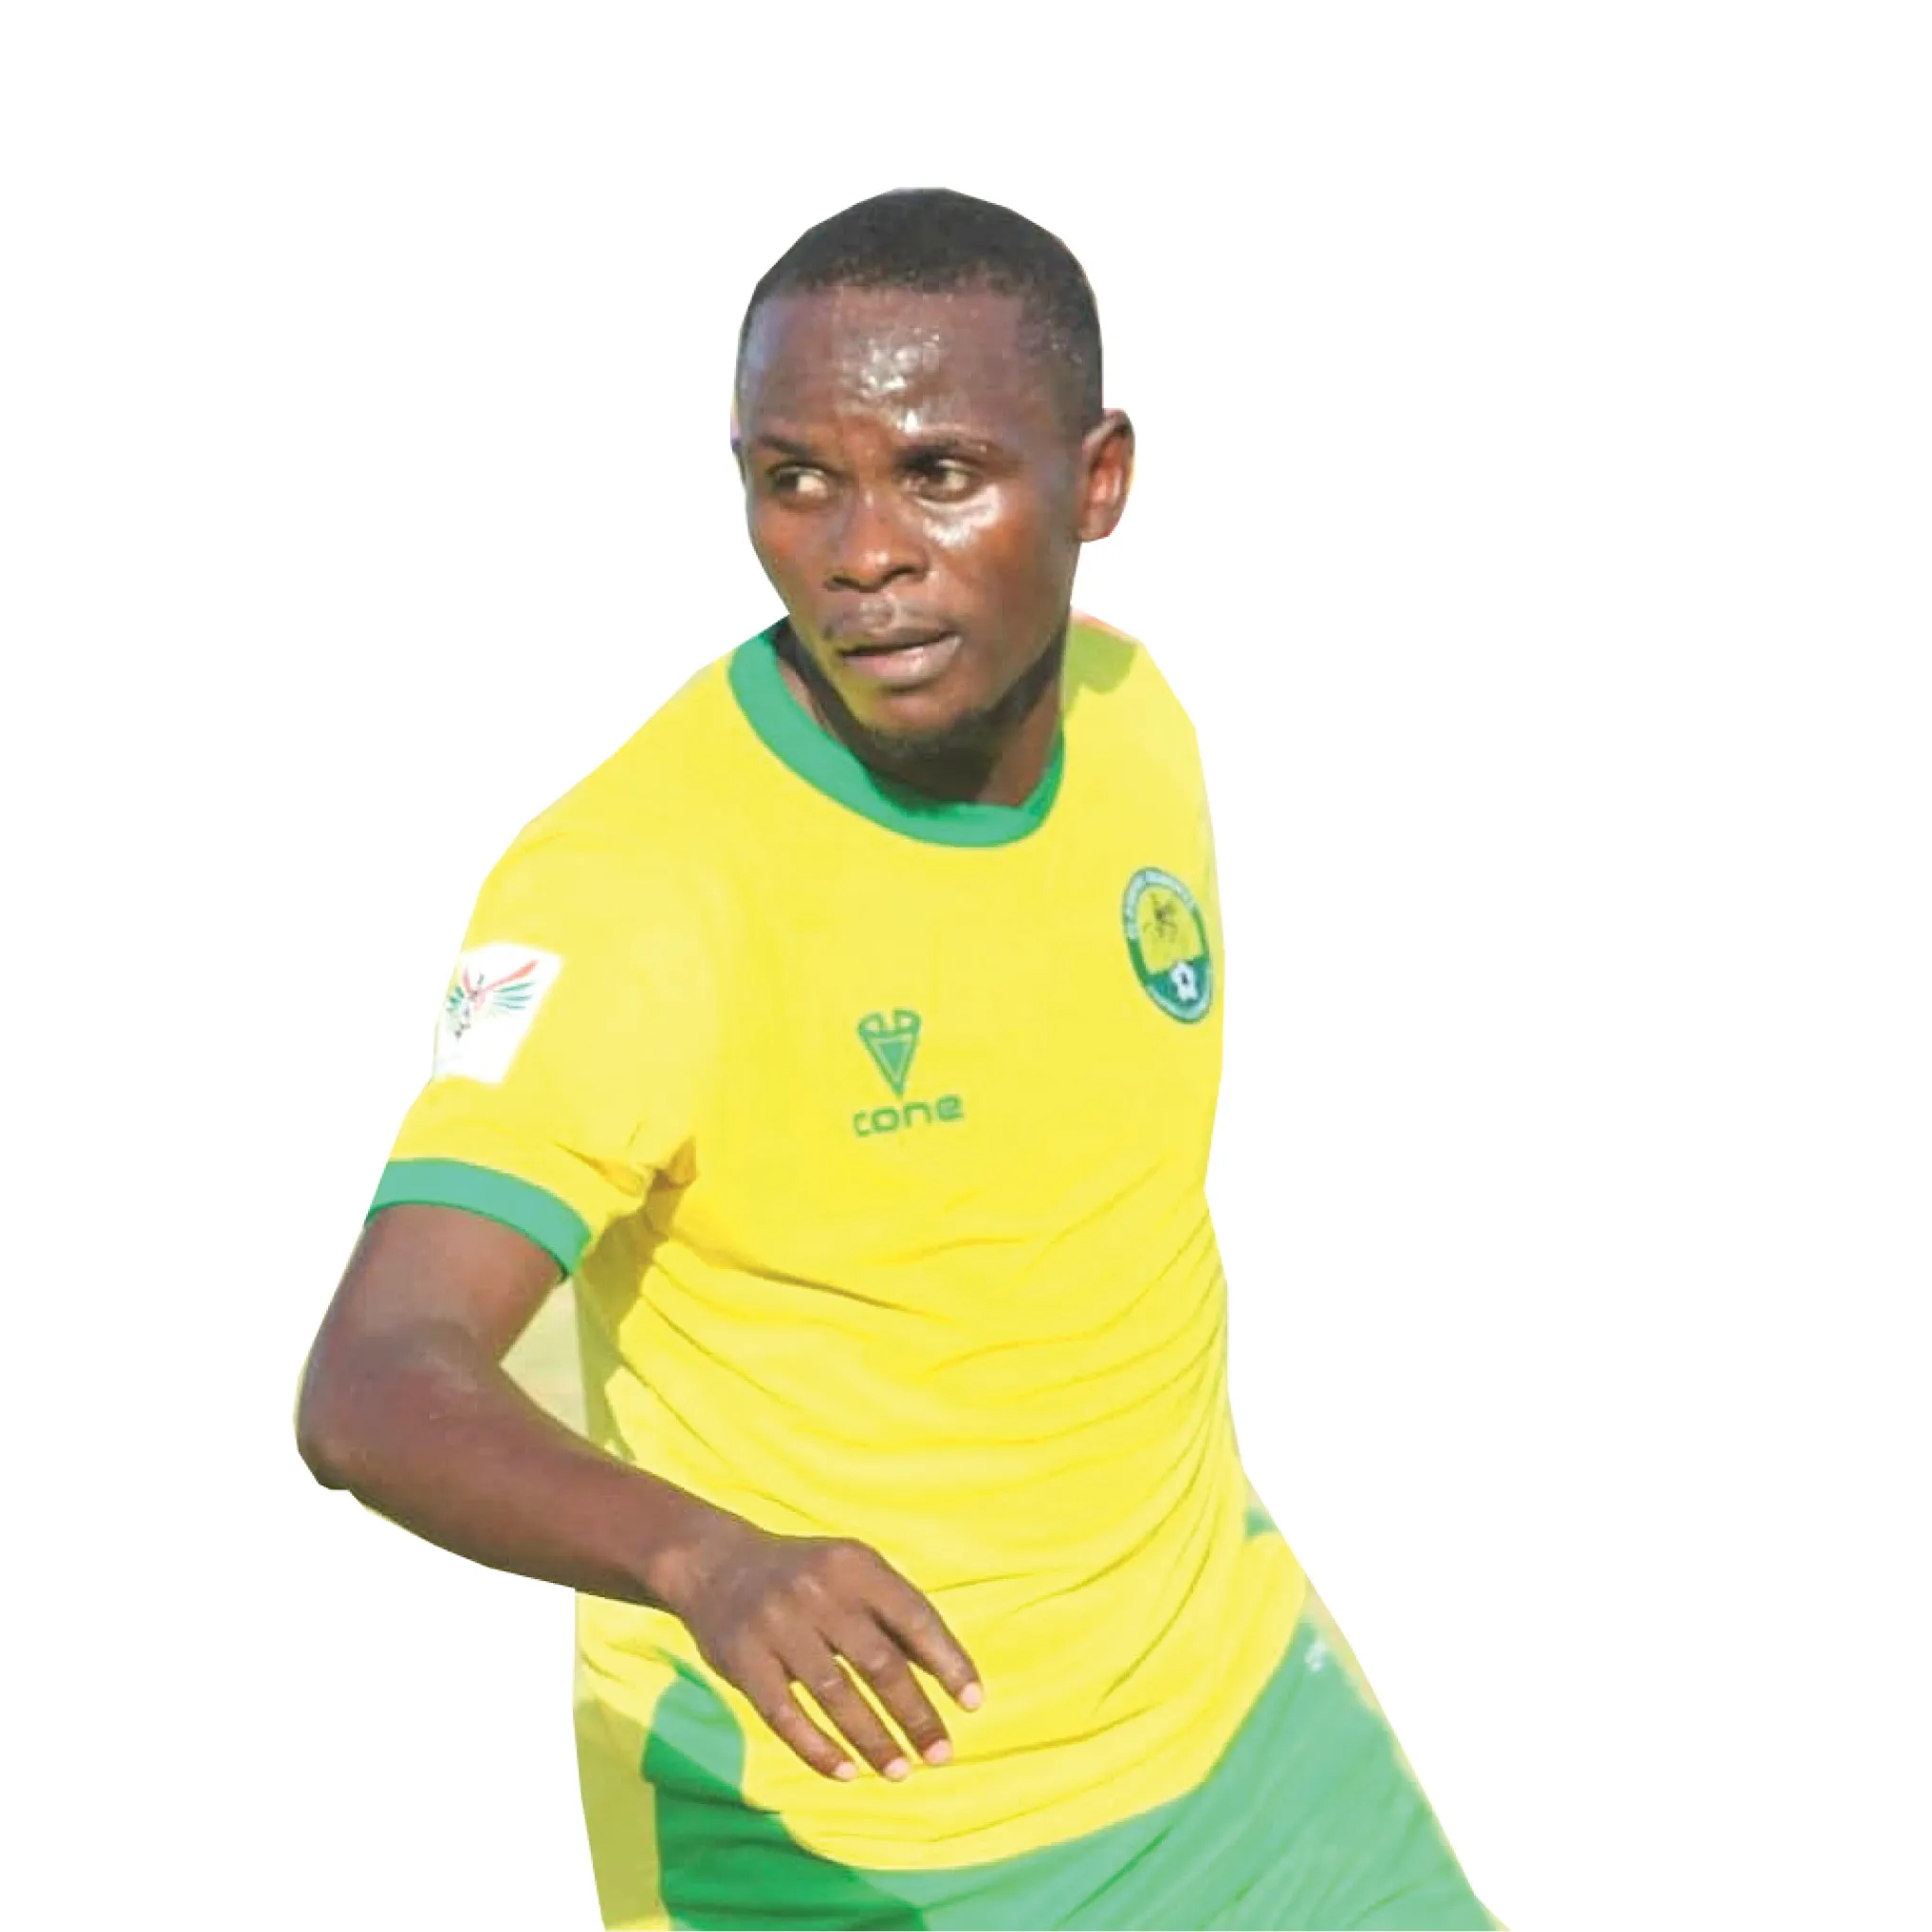 Former Super Eagles striker Bello Musa Kofarmata dies at 34